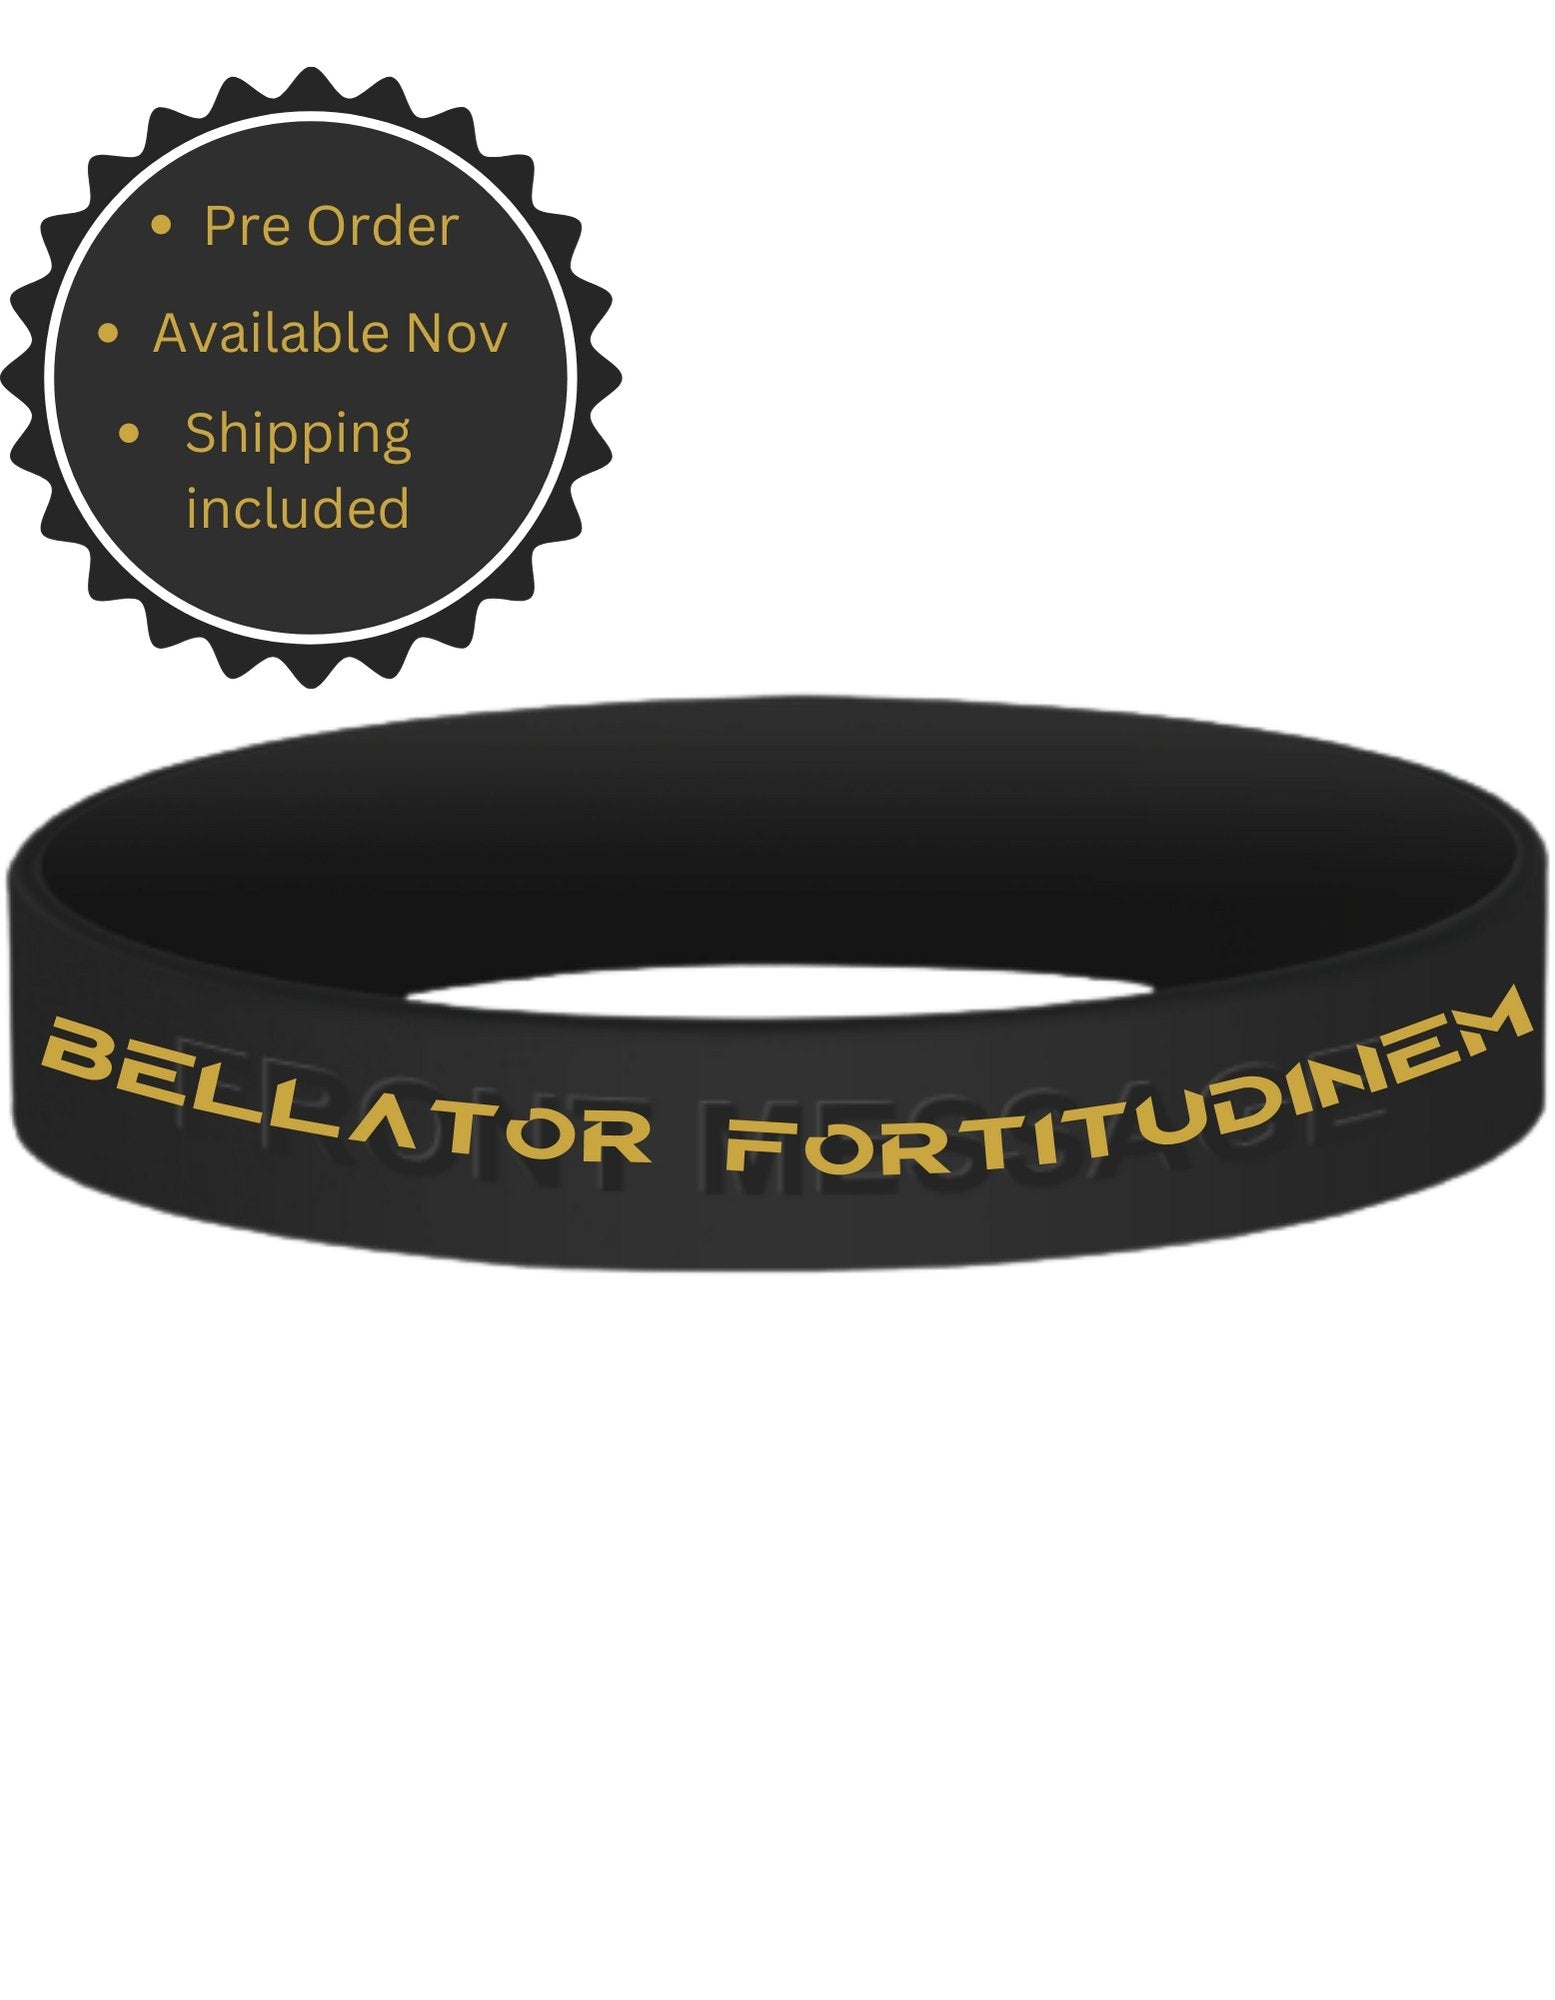 Bellator Fortitudinem Wristband - Three2Tango Tee's